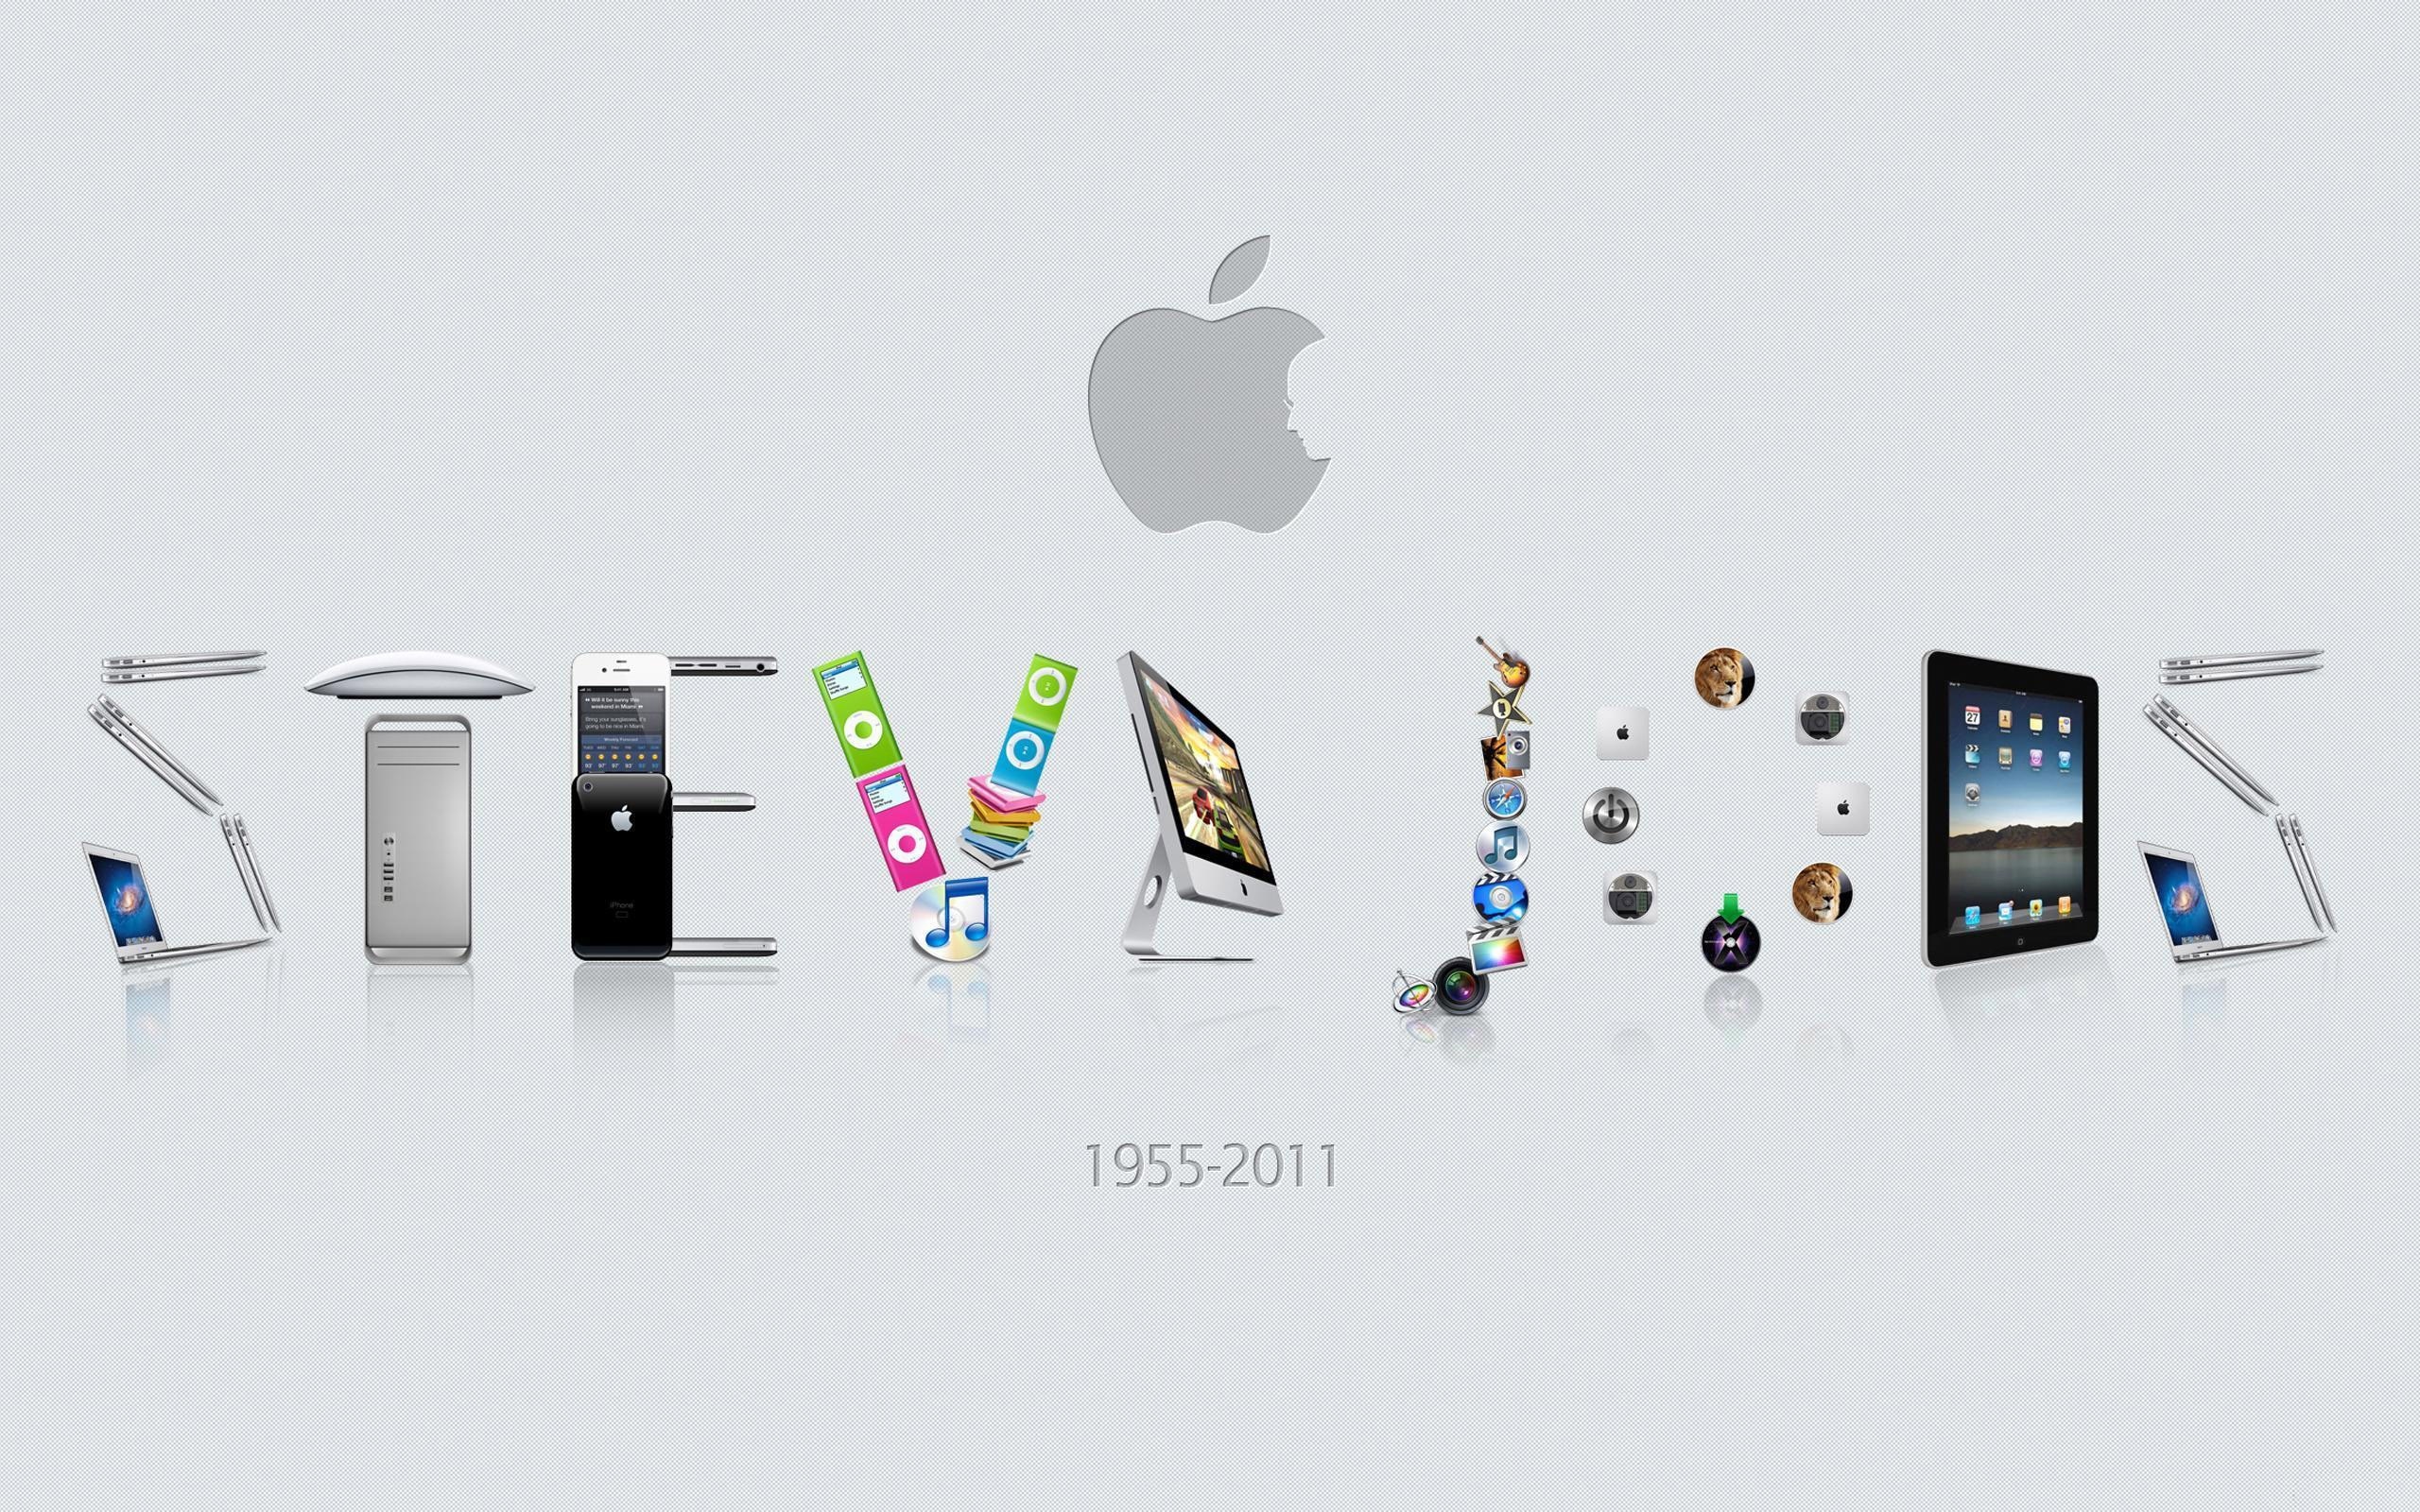 Steve Jobs Made Apple Great